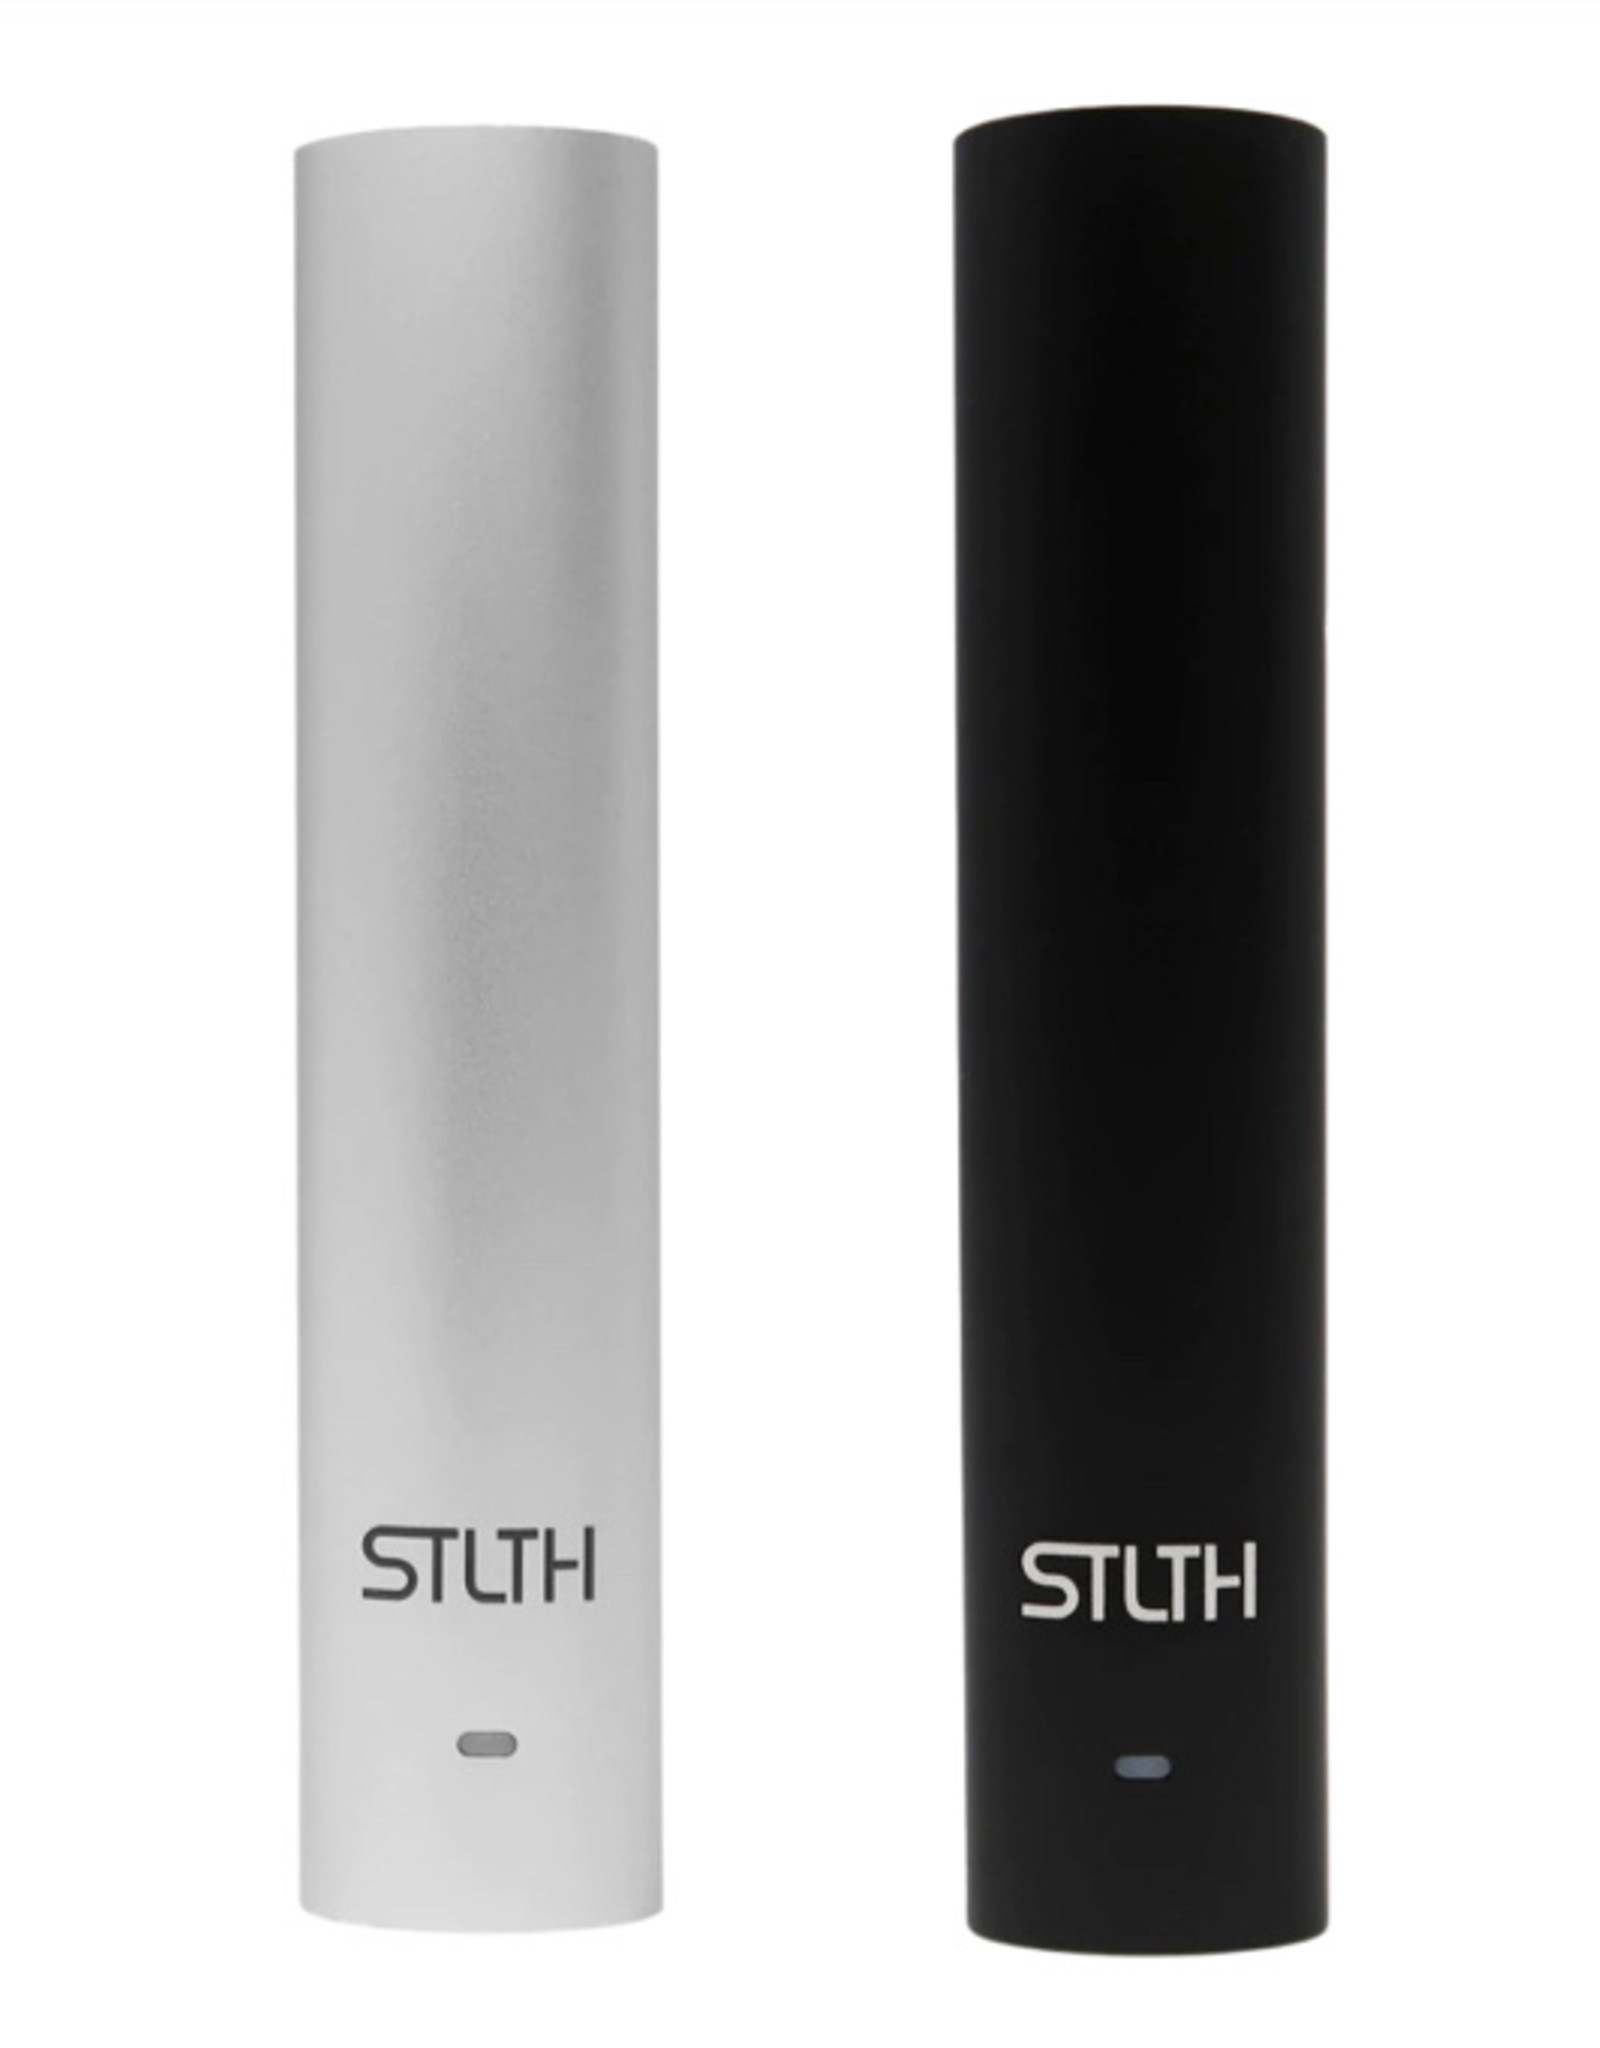 STLTH STLTH 470 mAh Device